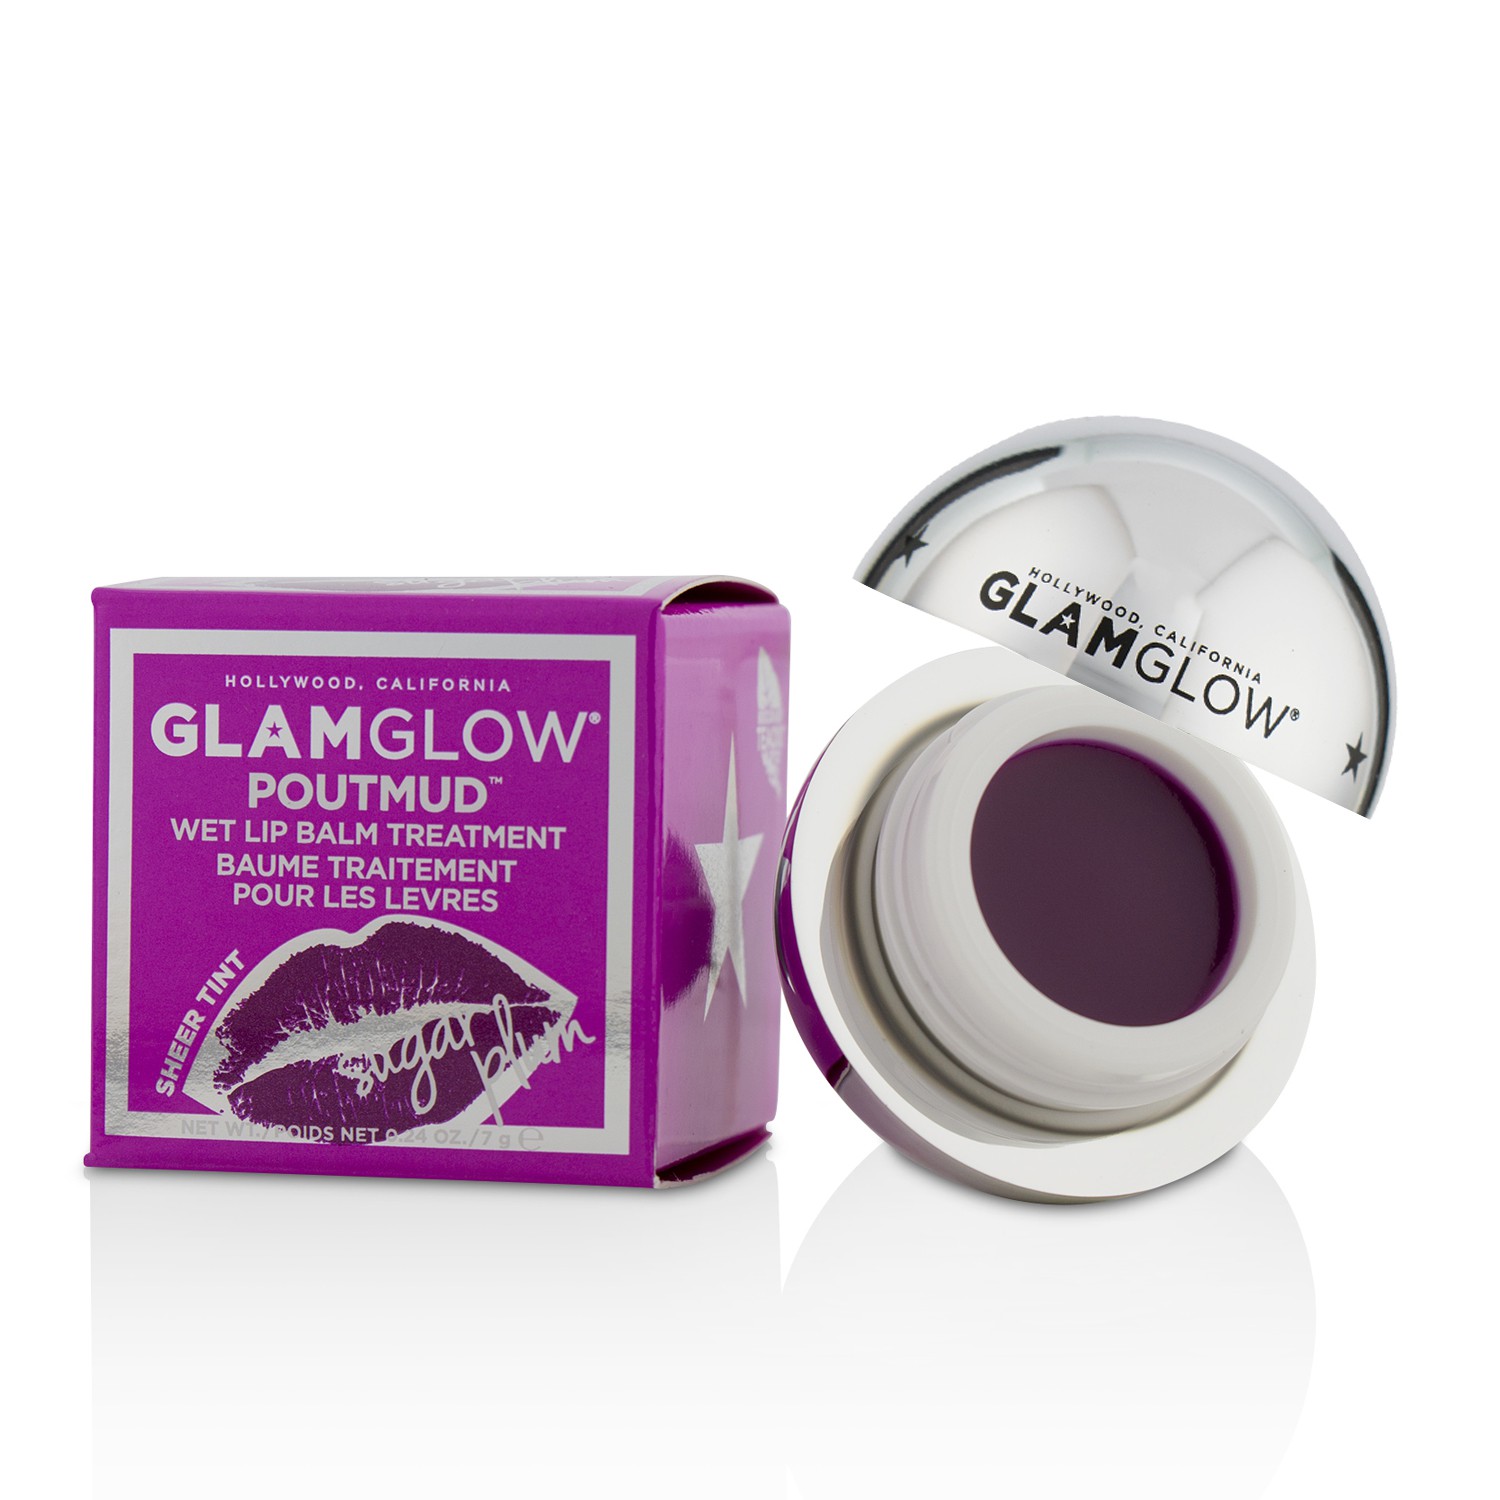 PoutMud Sheer Tint Wet Lip Balm Treatment - Sugar Plum Glamglow Image